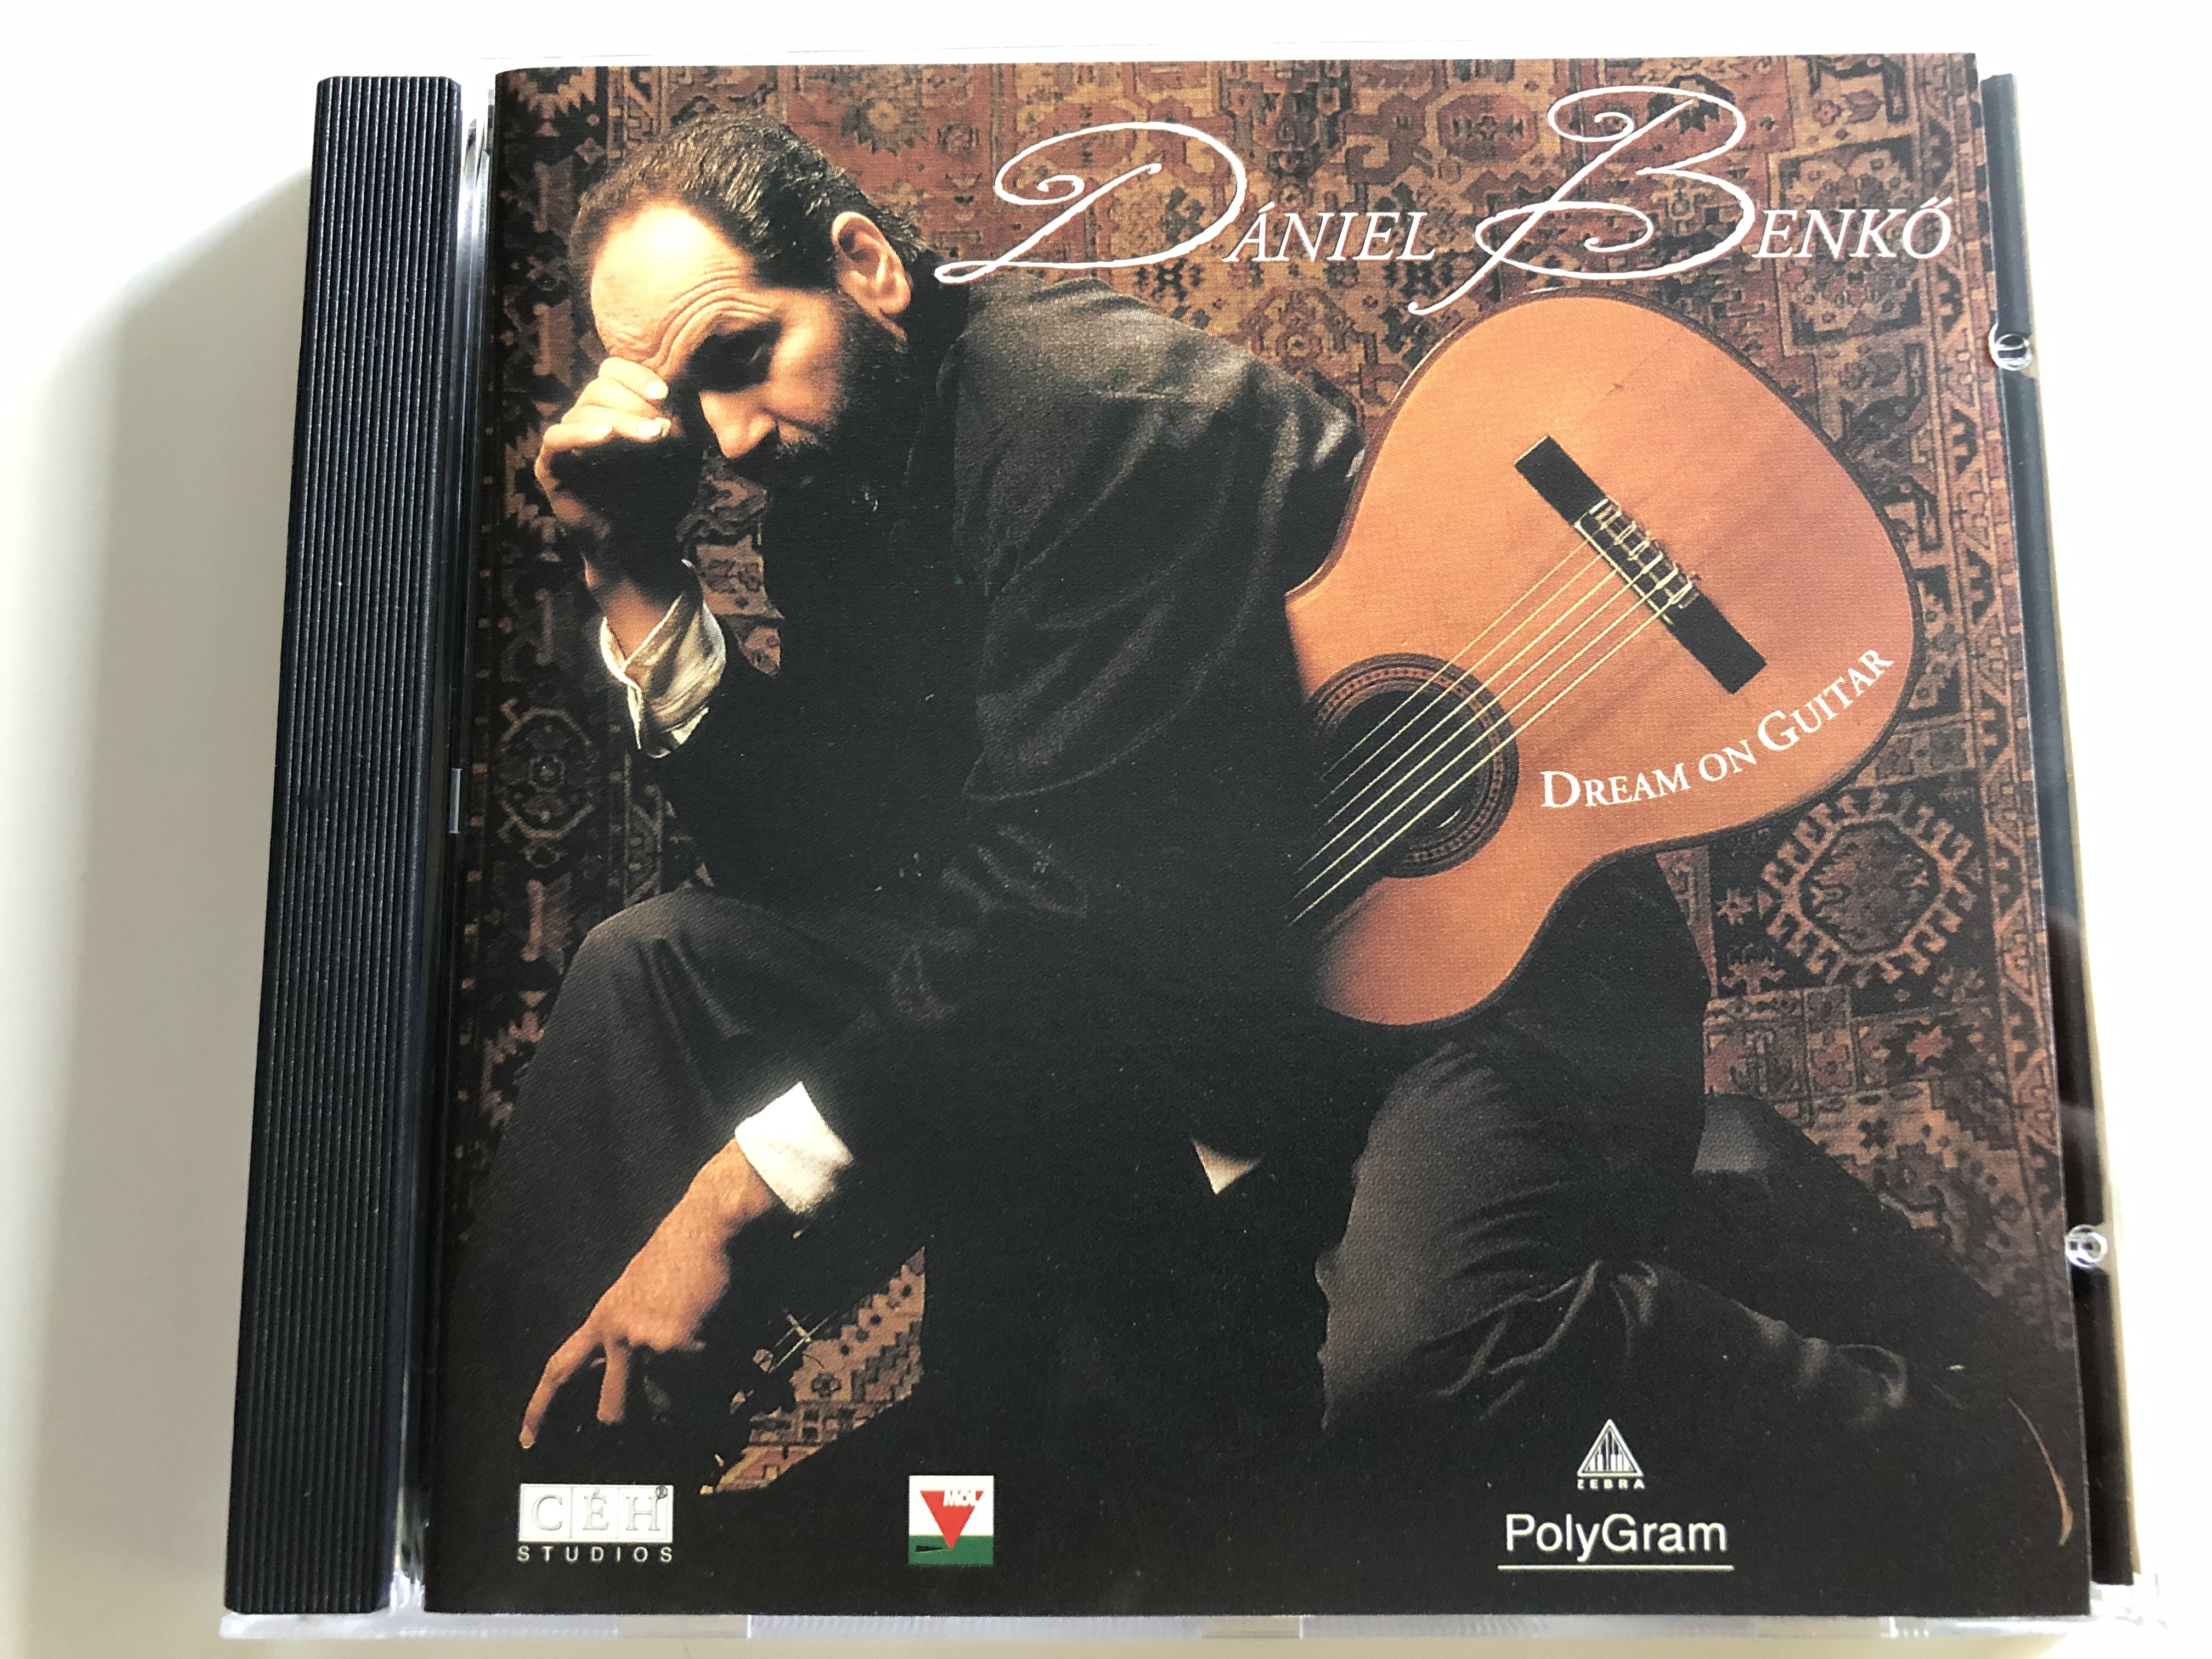 d-niel-benk-dream-on-guitar-polygram-audio-cd-1996-531177-2-1-.jpg